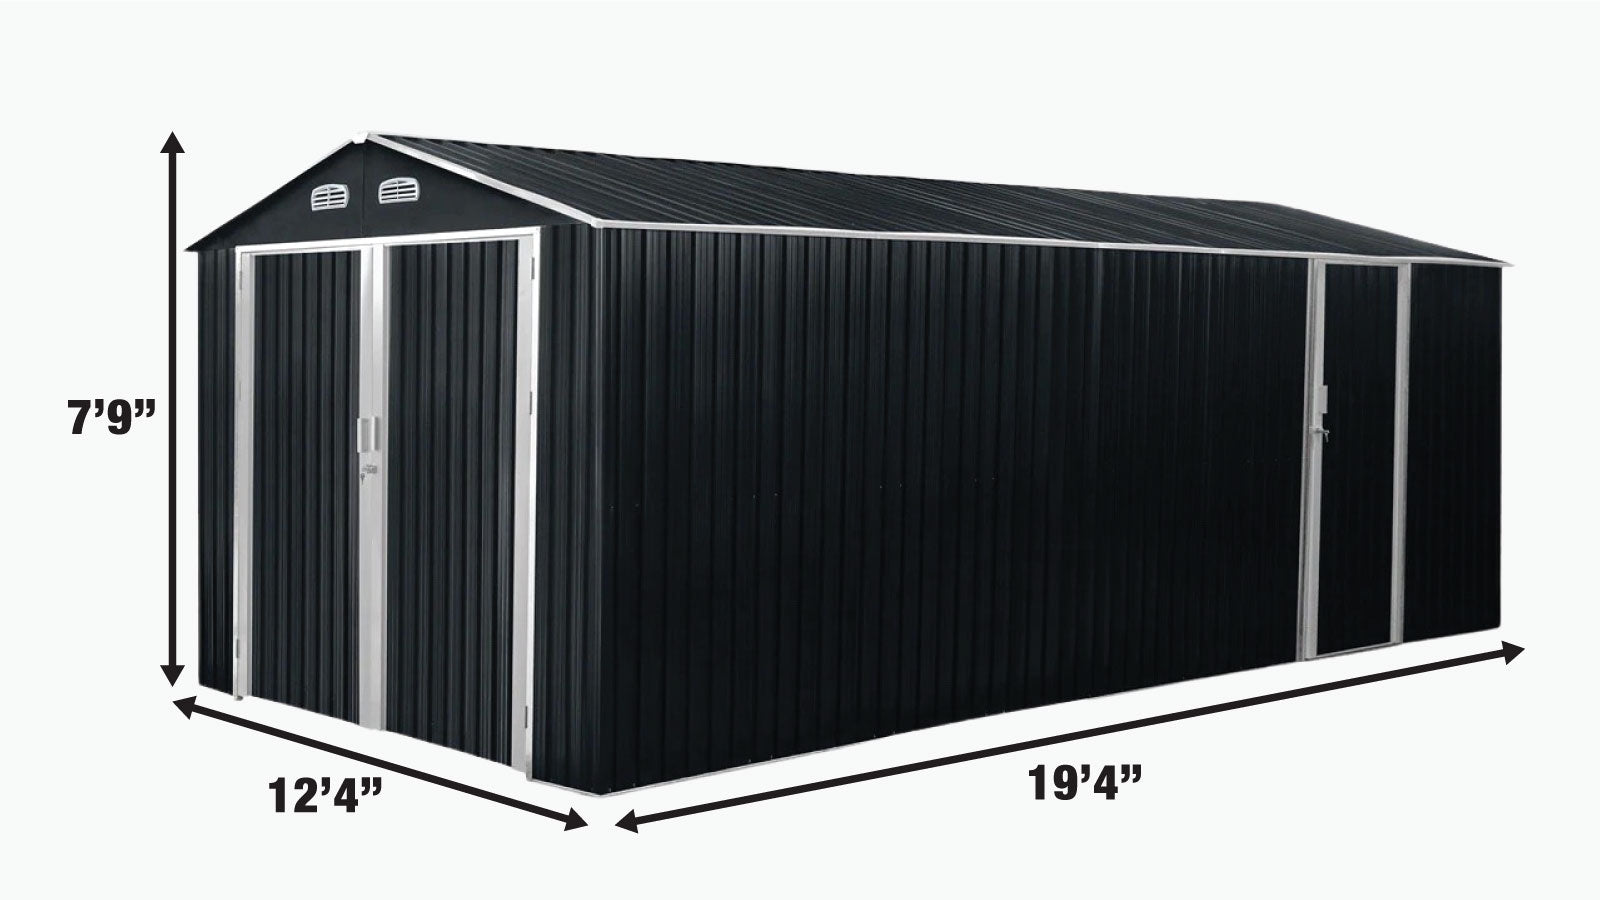 TMG Industrial 13’ x 20’ Metal Garage Shed with Double Front Doors, 7’9” Peak Height, Side Entry Door, 240 Sq-Ft Floor Space, TMG-MS1320A-specifications-image